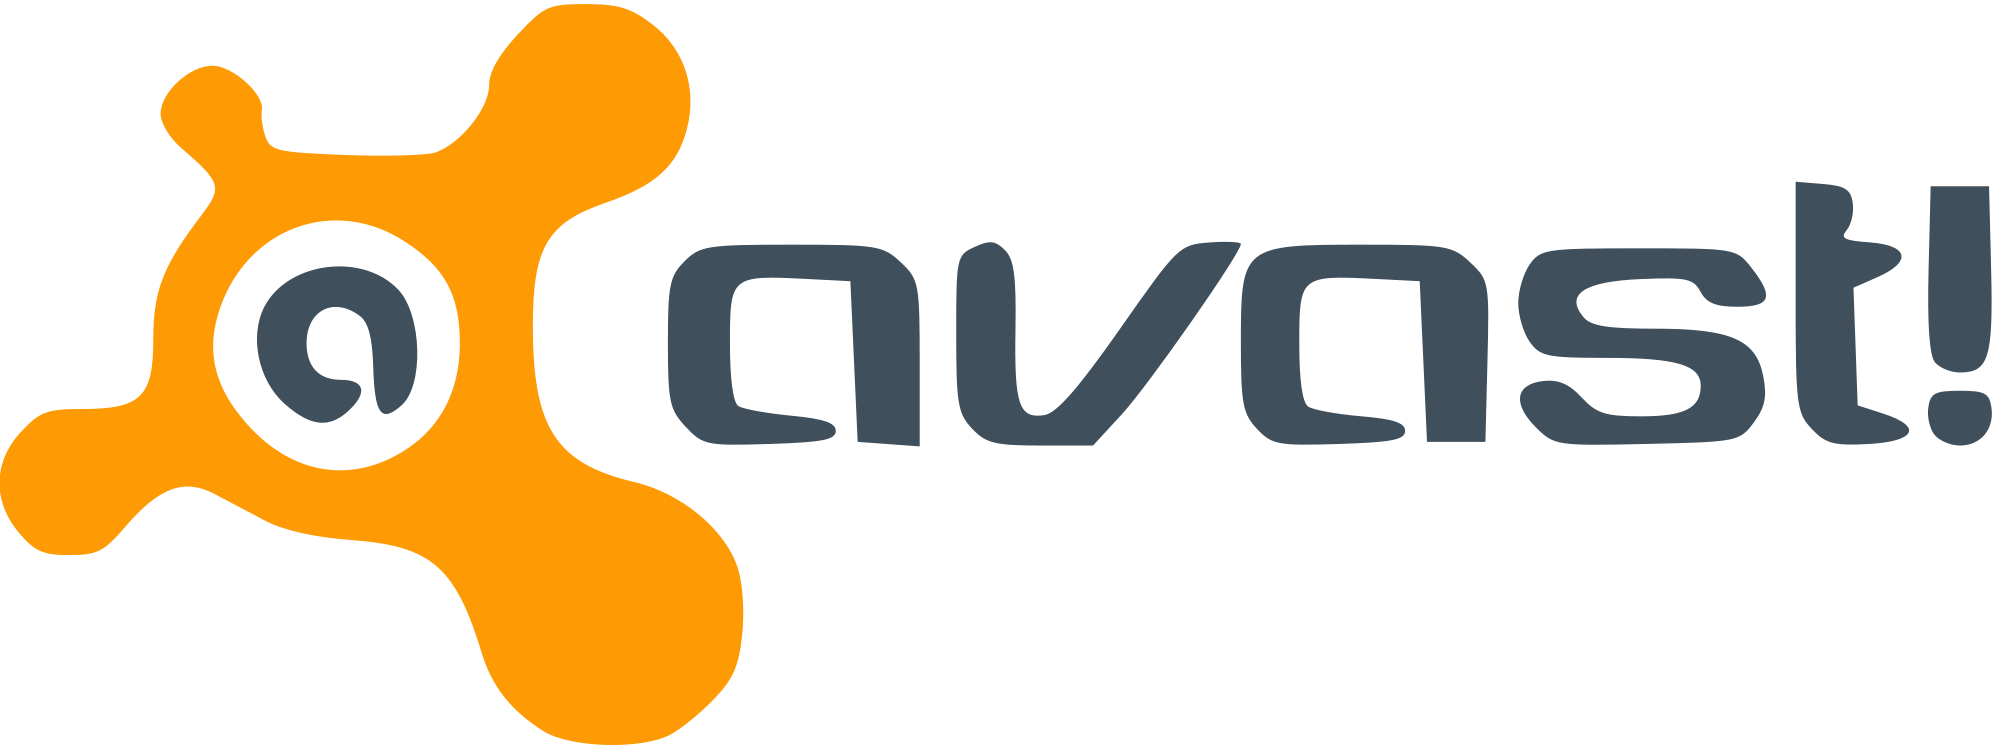 Avast Logo photo - 1